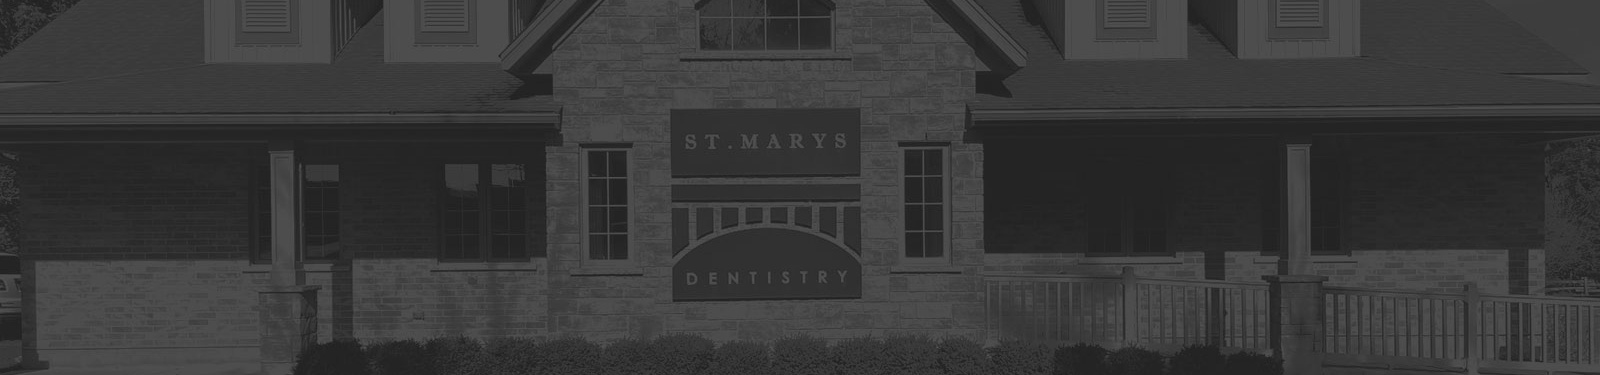 St Mary Dental Clinic